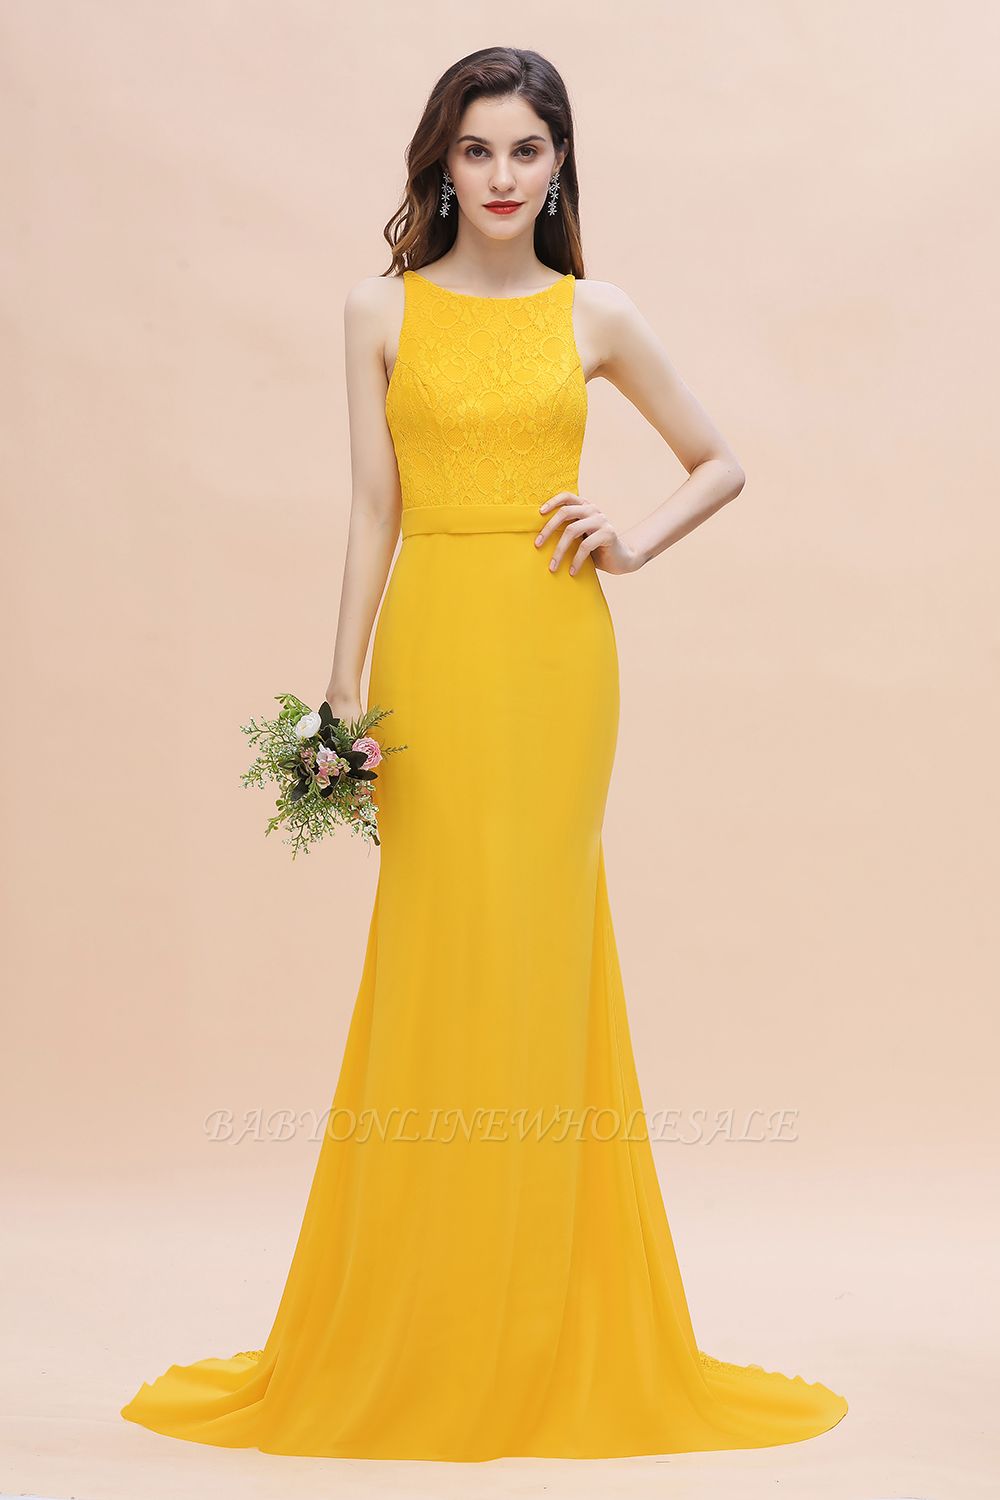 Bright Yellow Jewel Neck Mermaid Bridesmaid Dress Sleeveless Long Wedding Guest Dress